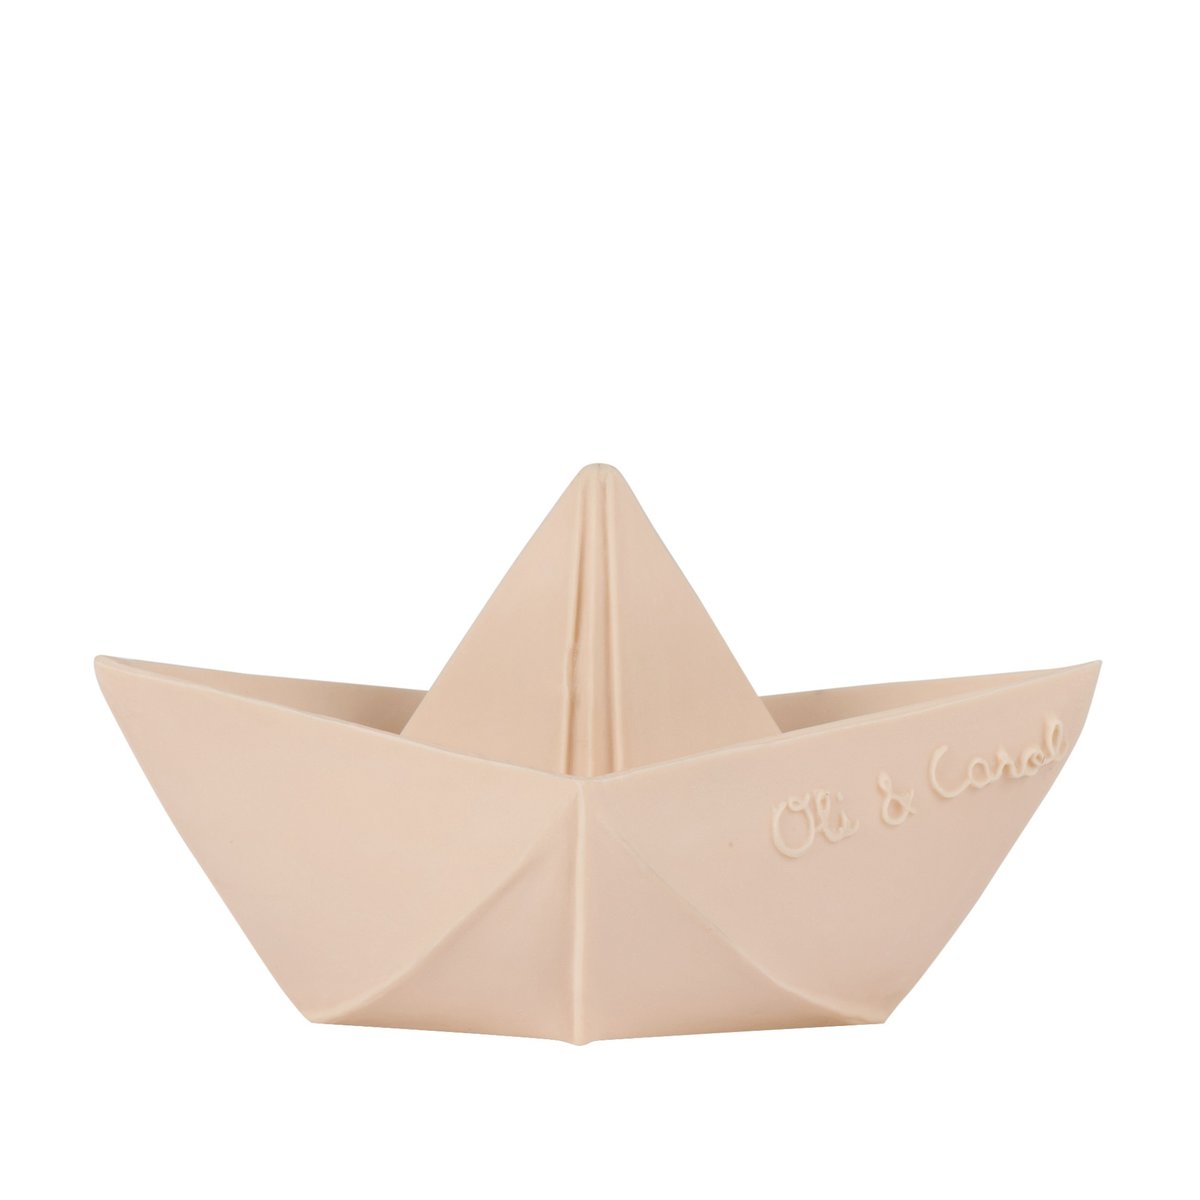 Oli And Carol 巴塞隆拿100天然橡膠牙膠玩具沖涼玩具 Origami Boats Nude Hktvmall 